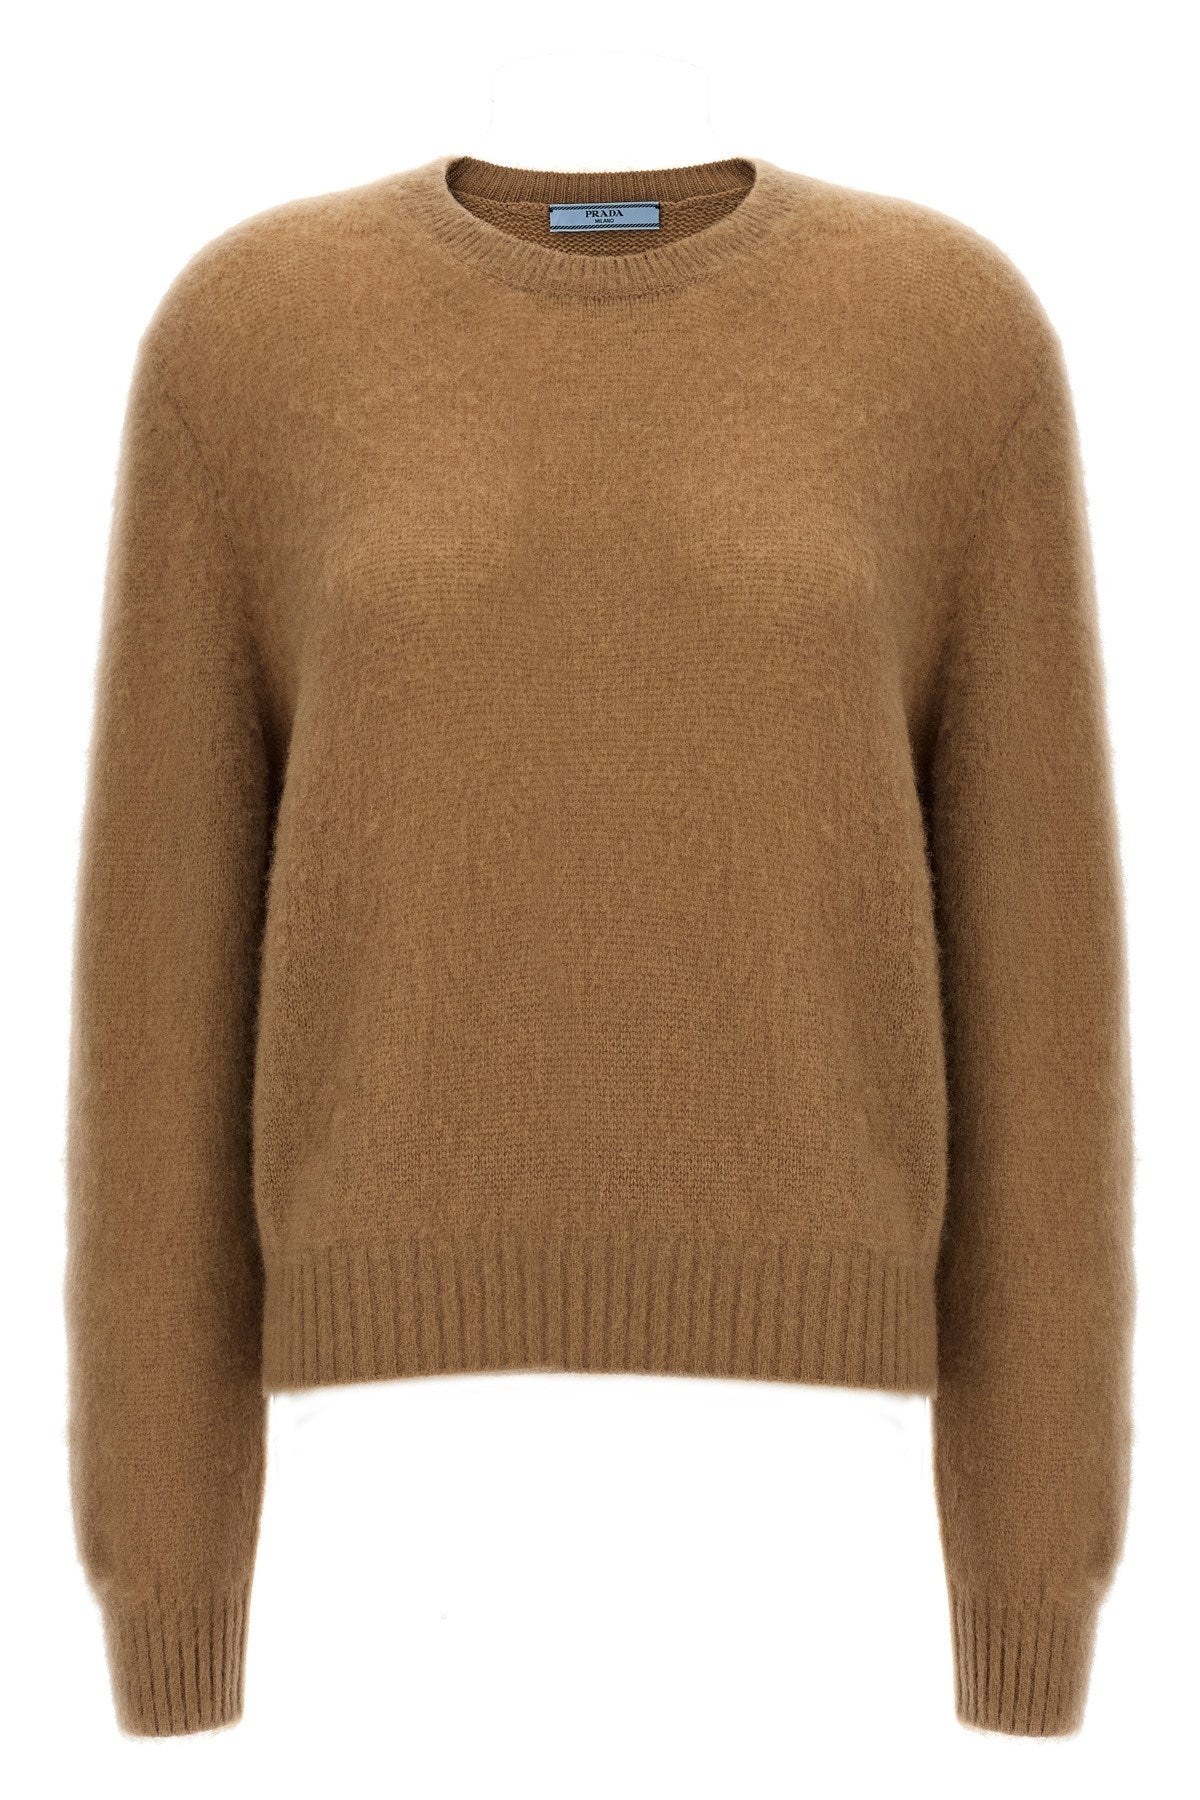 Prada Women Cashmere Sweater